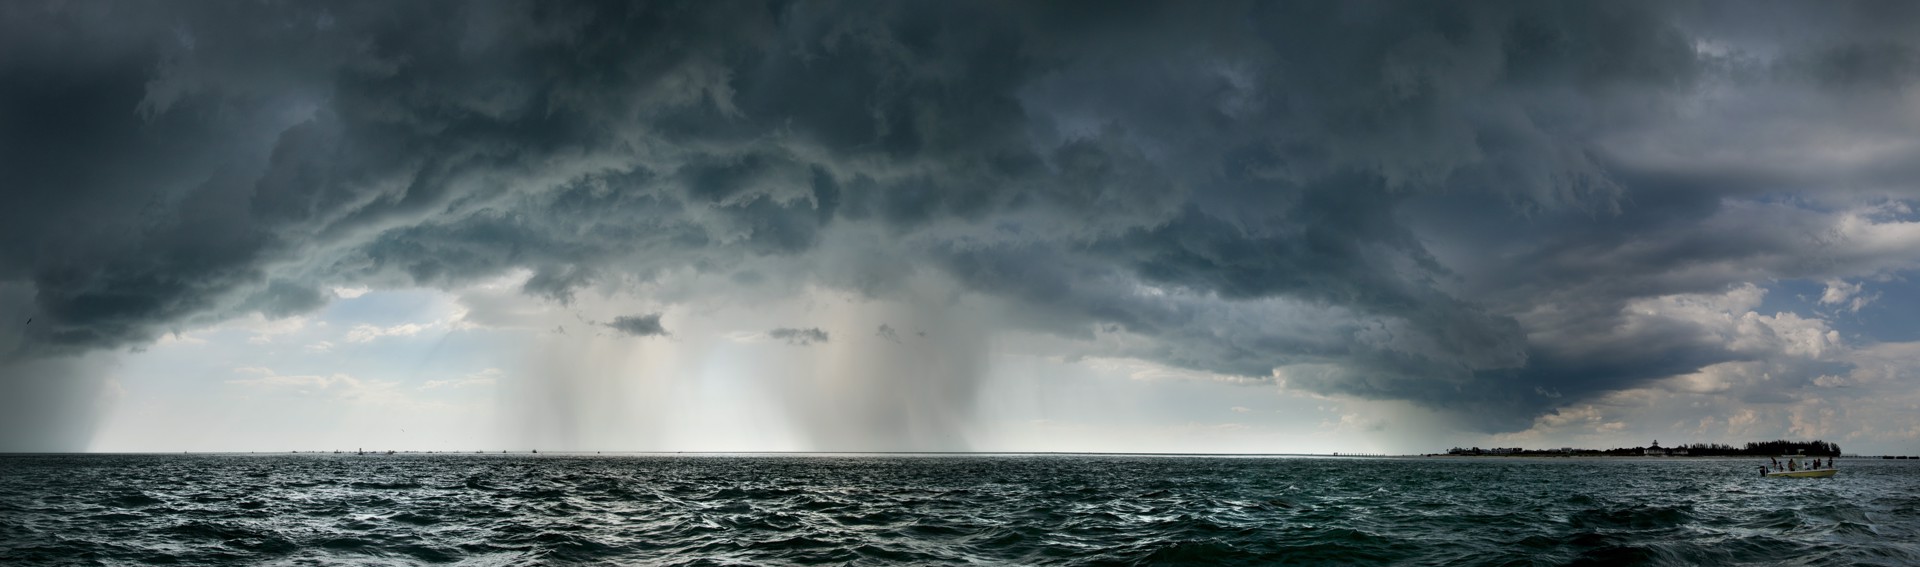 Storm Over Boca Grande by Carlton Ward Photography